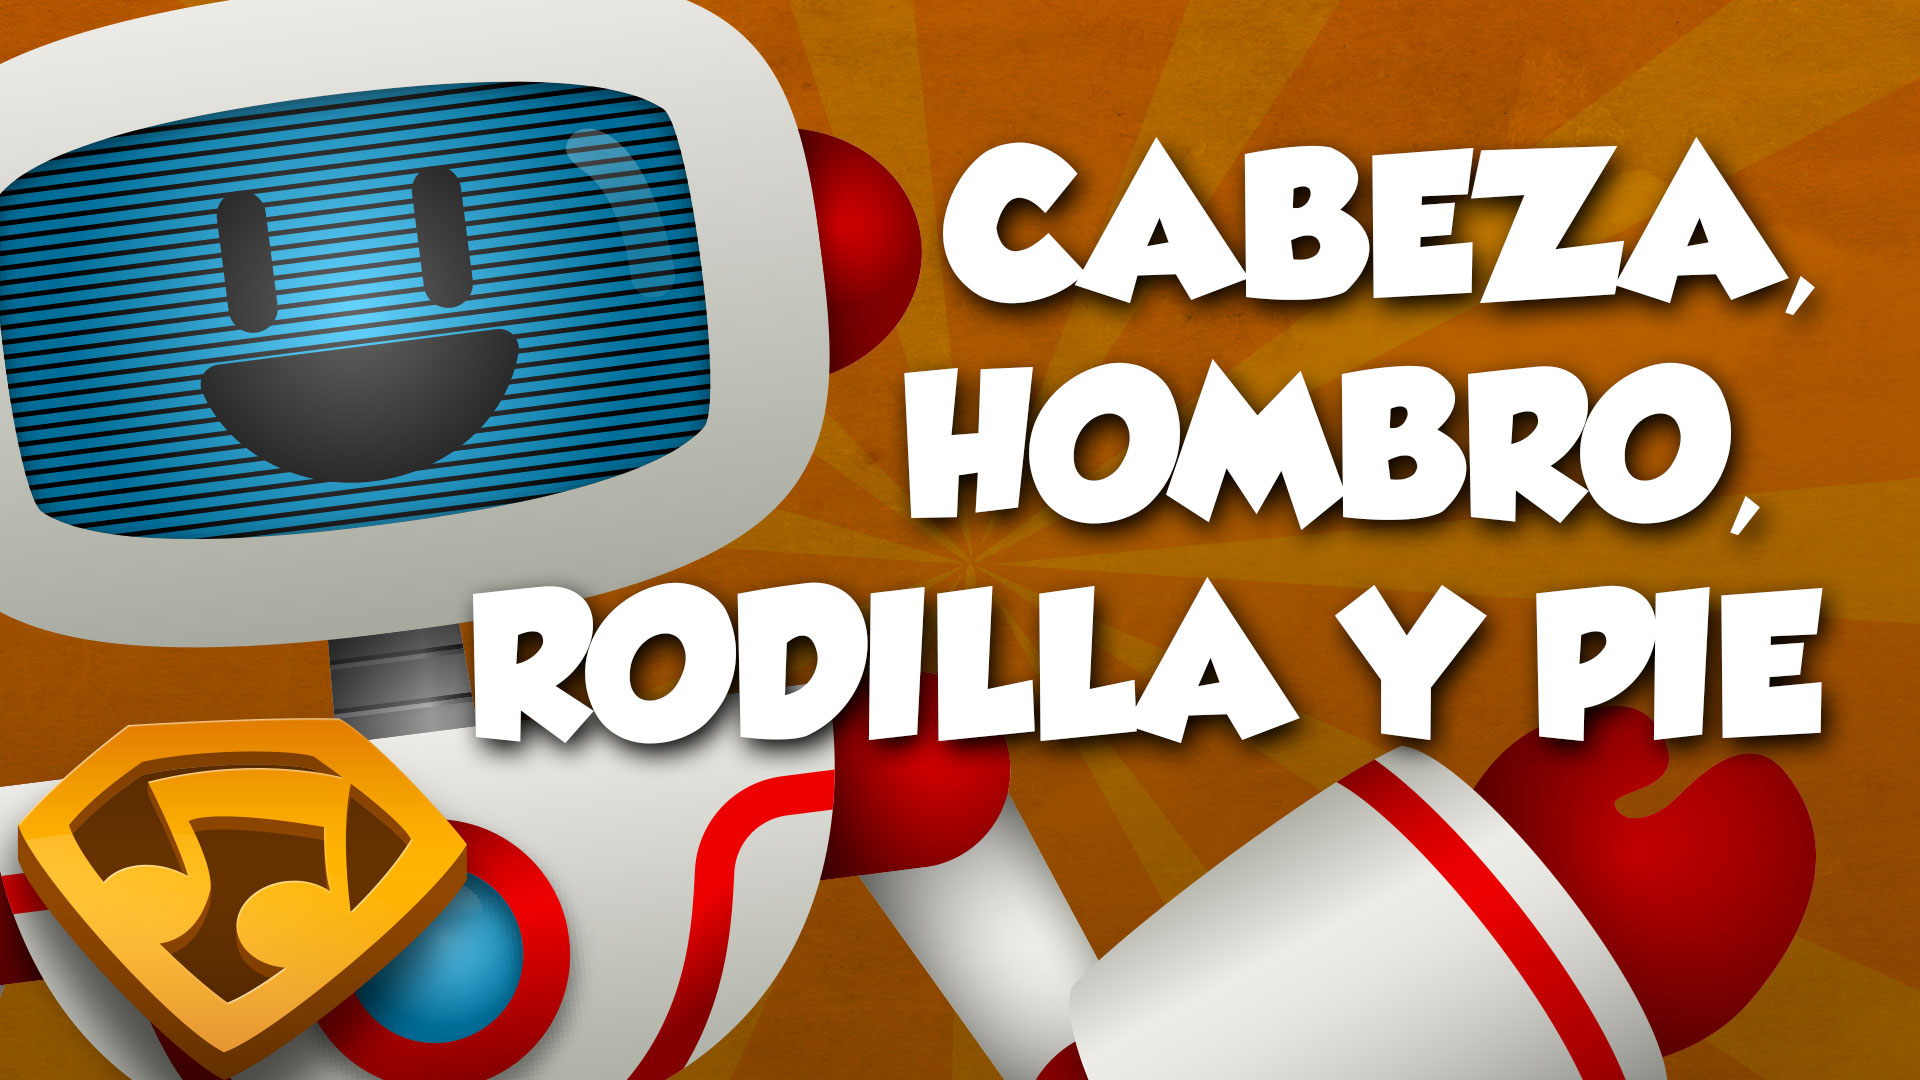 Cabeza, Hombro, Rodilla y Pie video thumbnail. Click to watch the video.